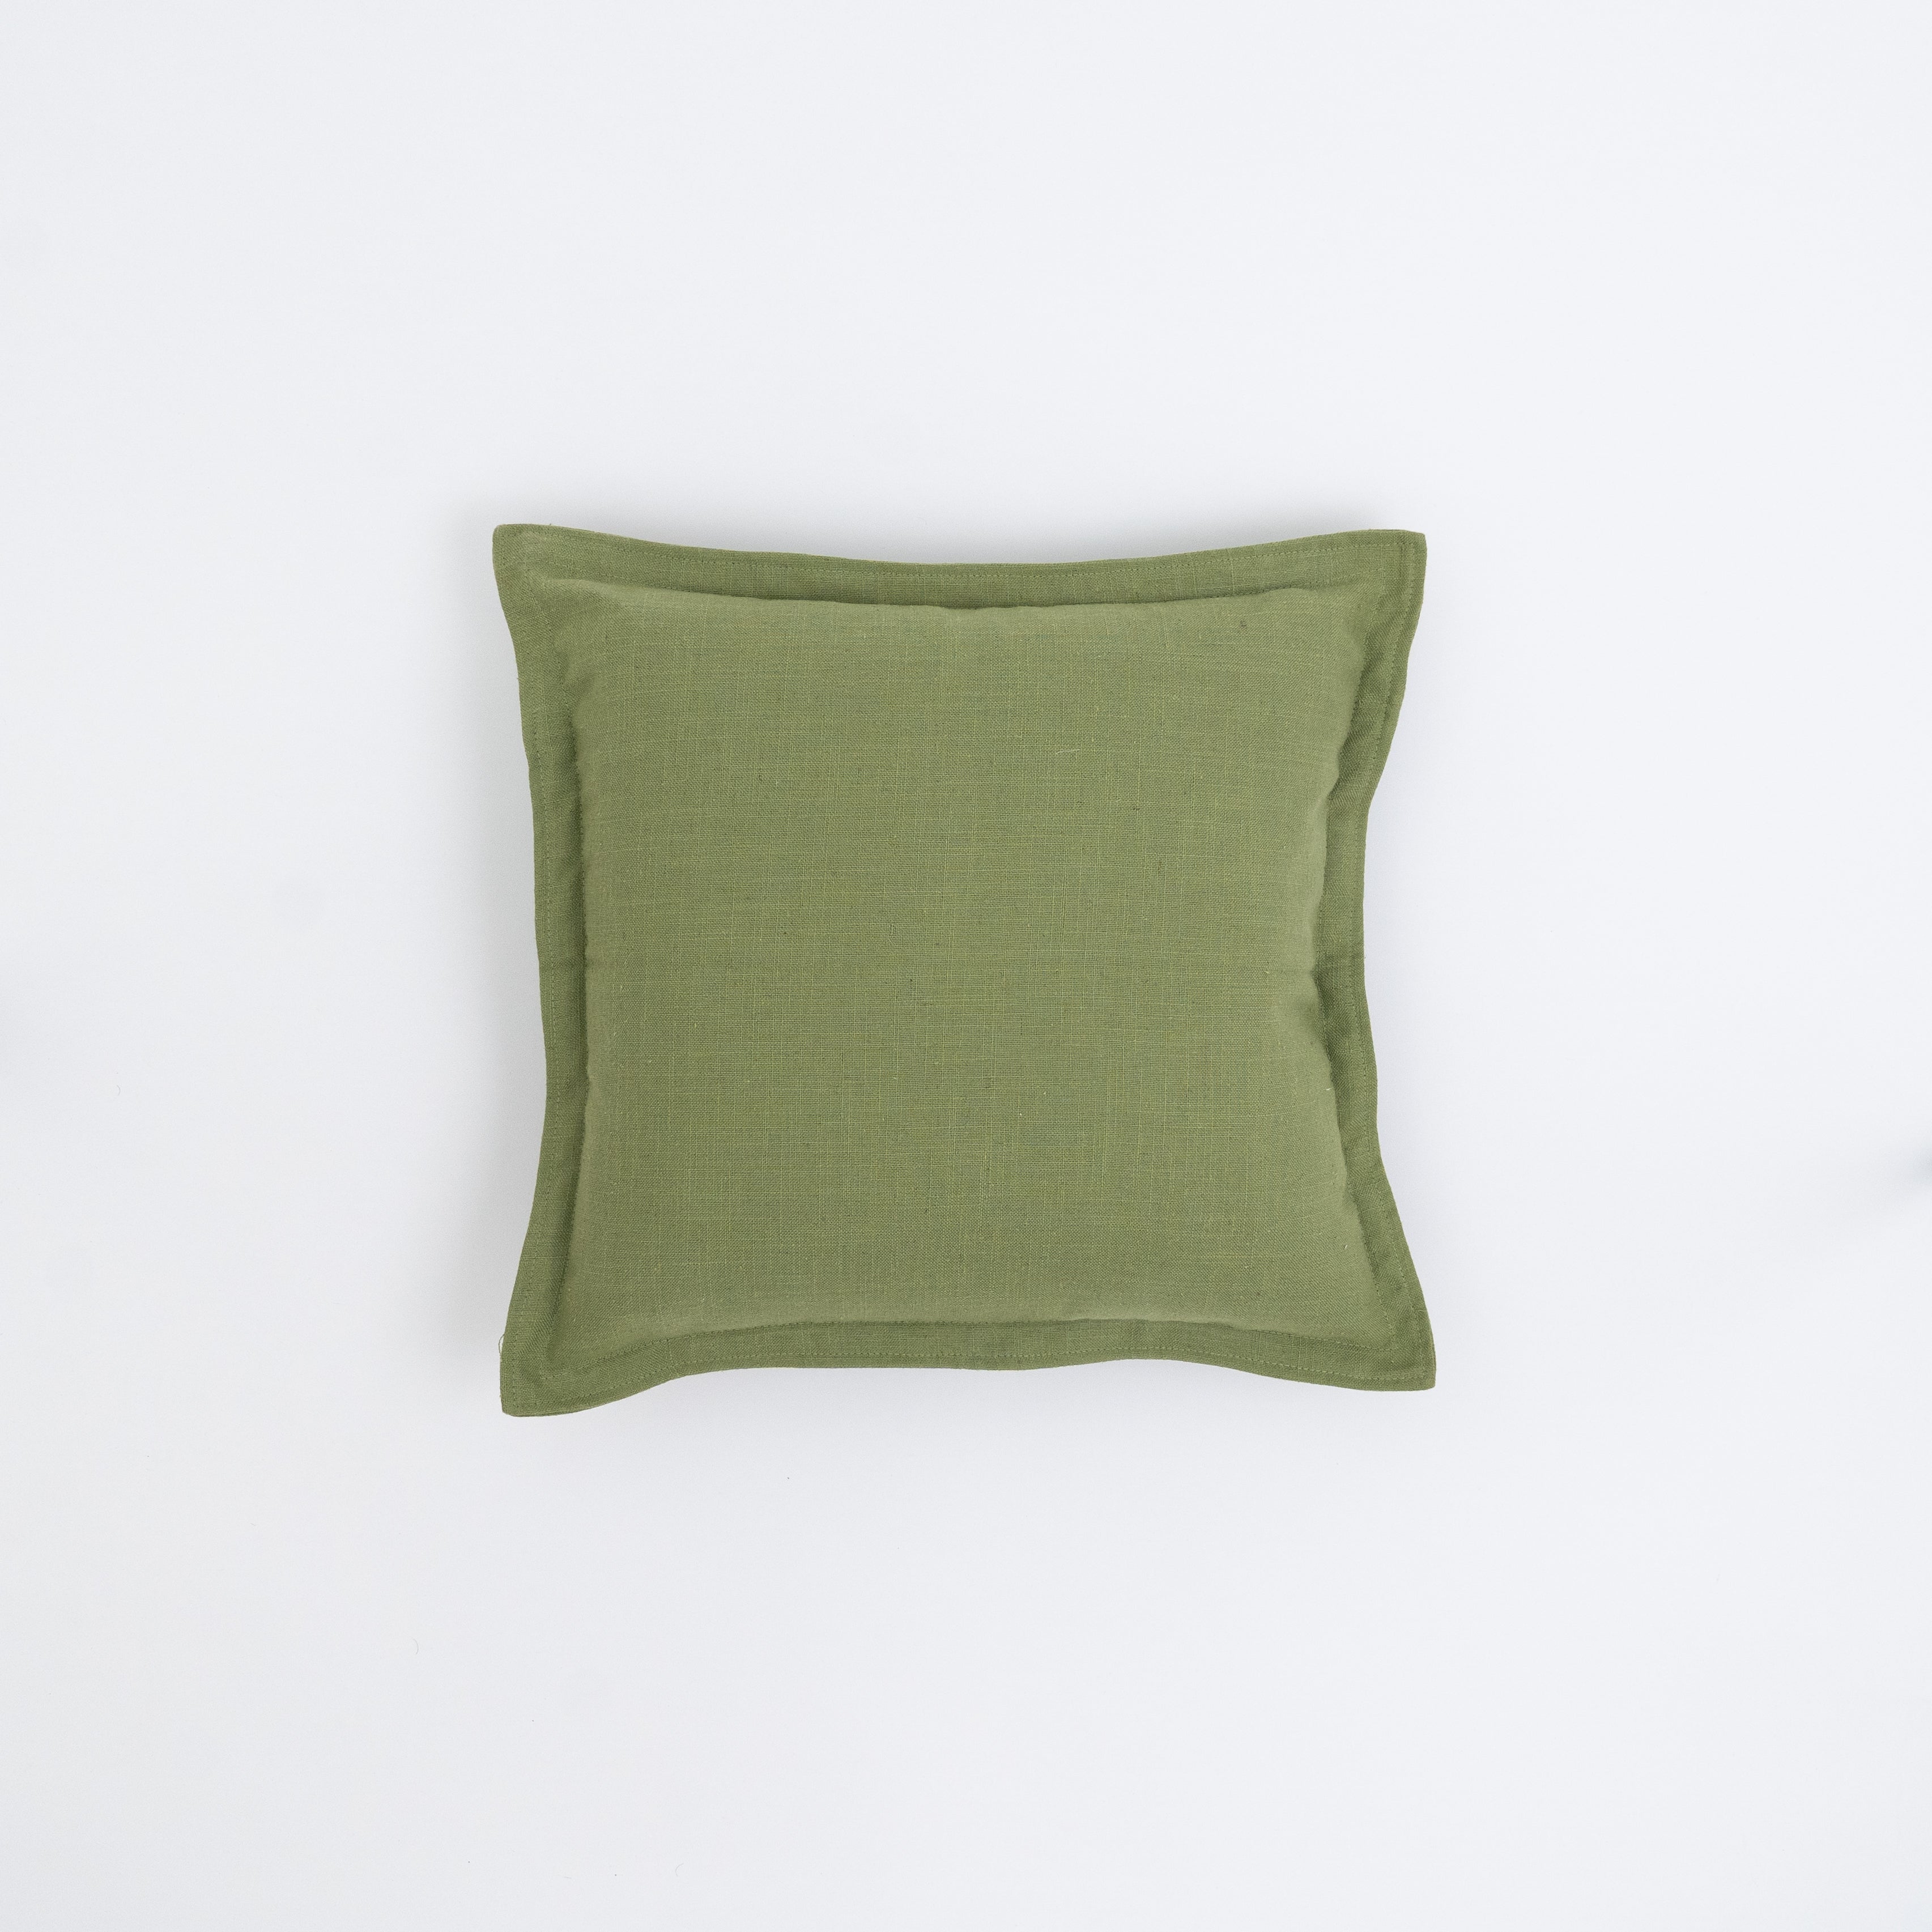 Cushion Cover Green 45 x45cm  - WS Living - UAE - Cushions Wood and steel Furnitures - Dubai